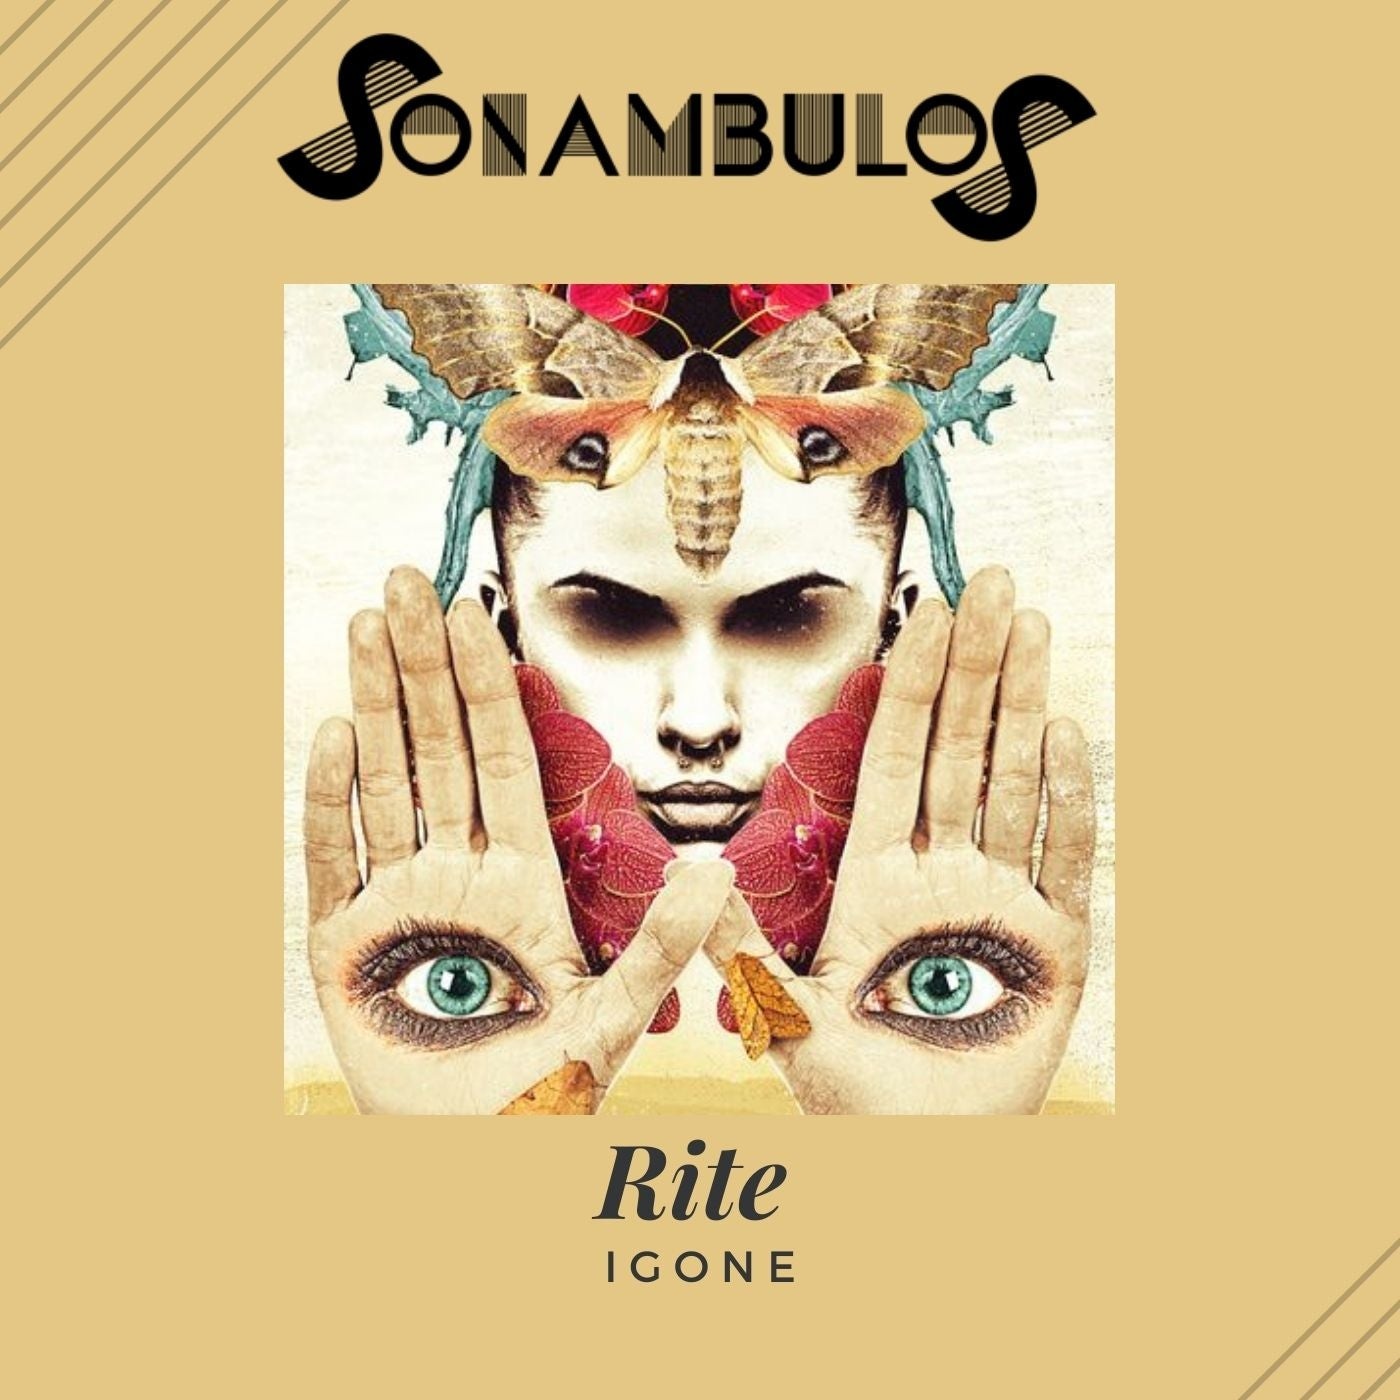 Igone - Rite [SB46]